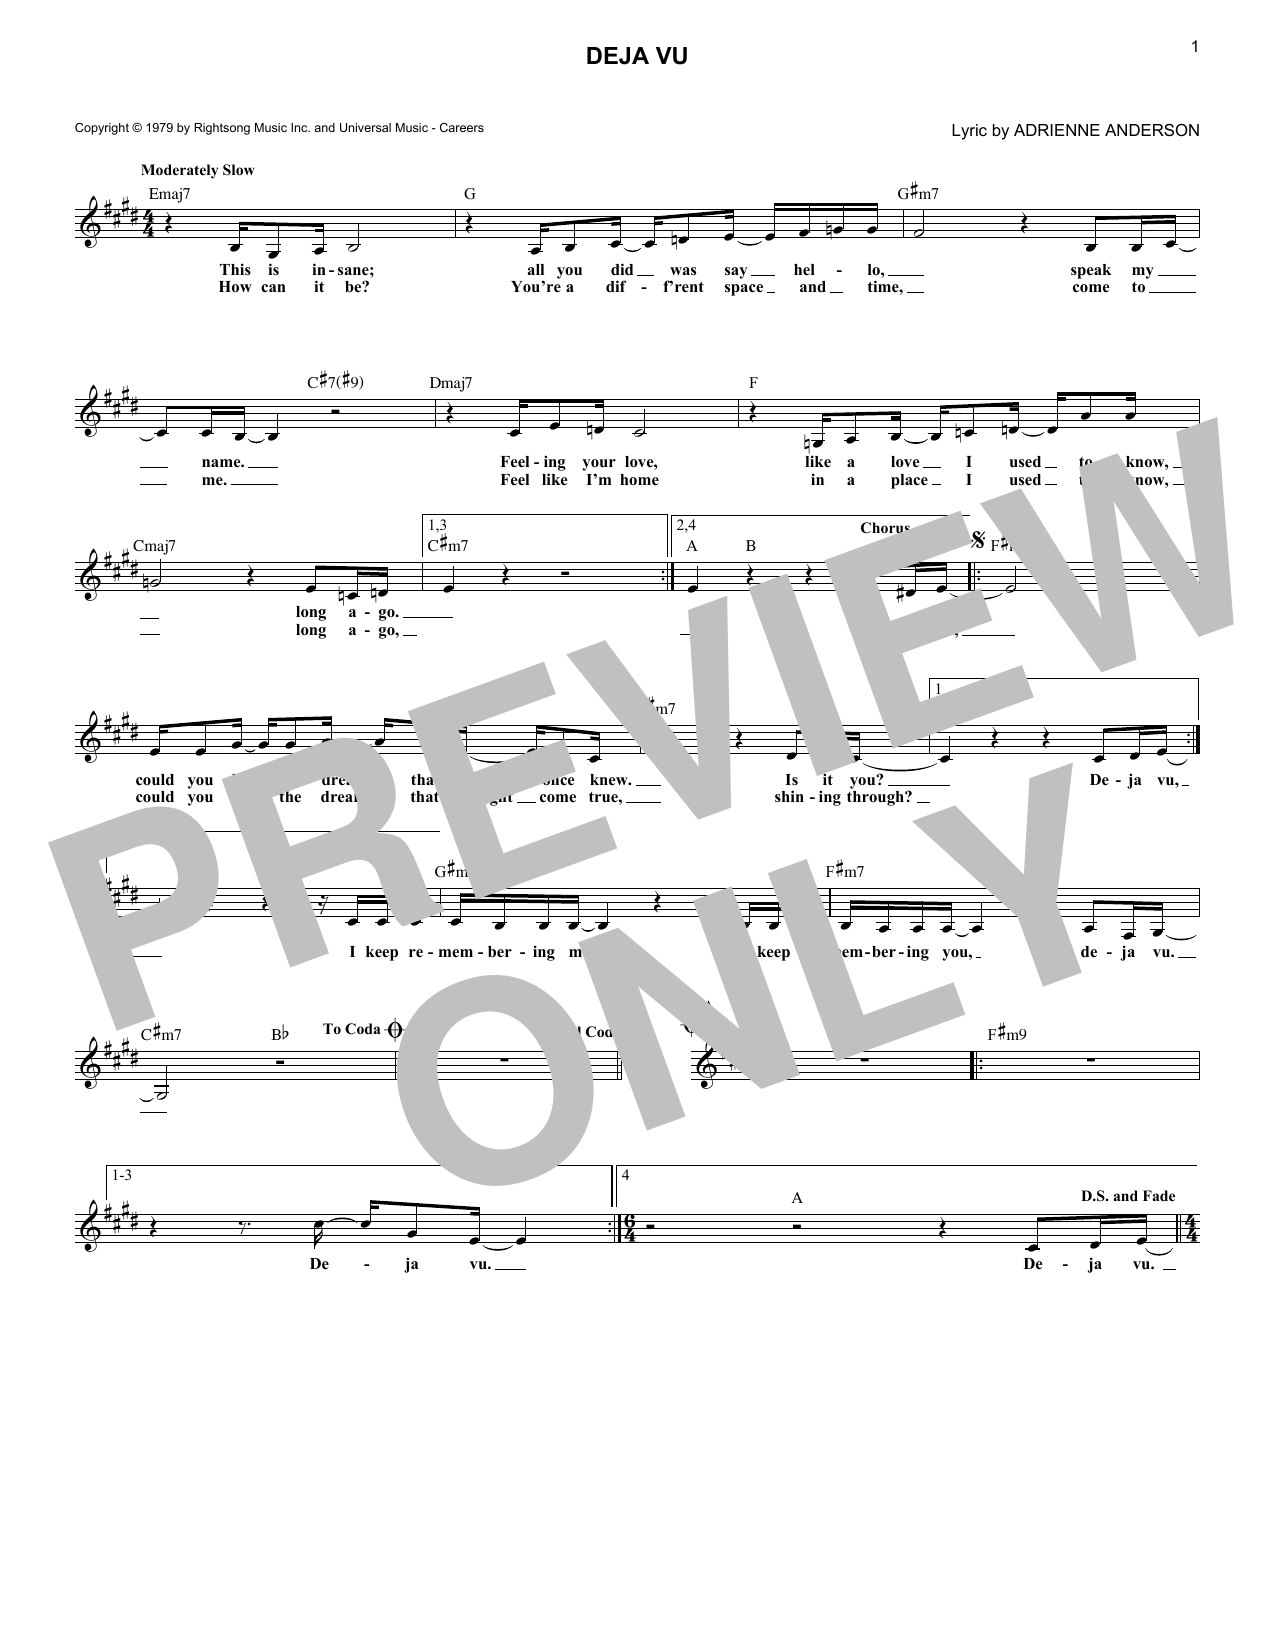 Dionne Warwick Deja Vu Sheet Music Notes & Chords for Melody Line, Lyrics & Chords - Download or Print PDF